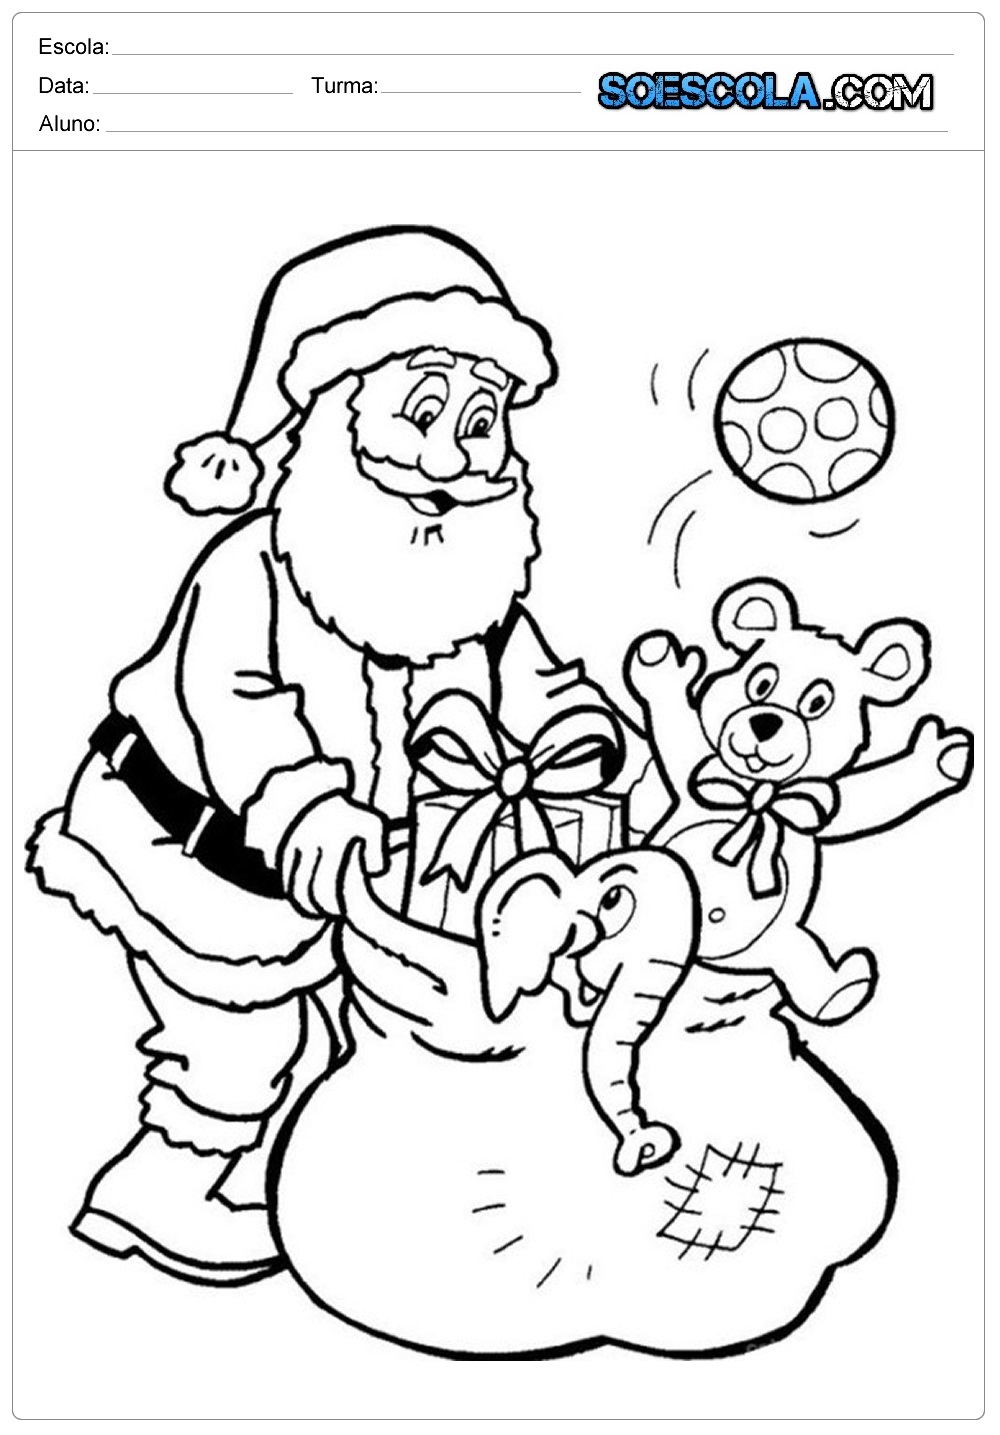 20 Desenhos de Natal para Colorir e Imprimir - Papai Noel em PDF.